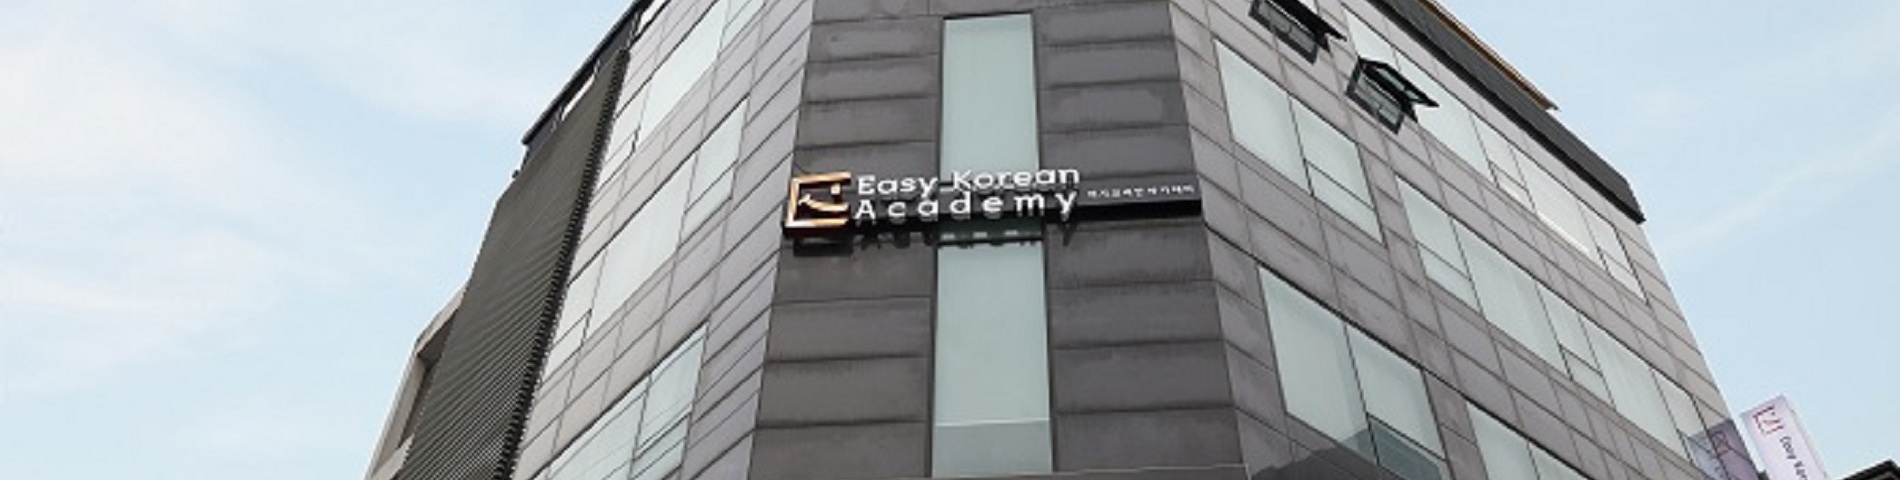 Easy Korean Academy foto 1